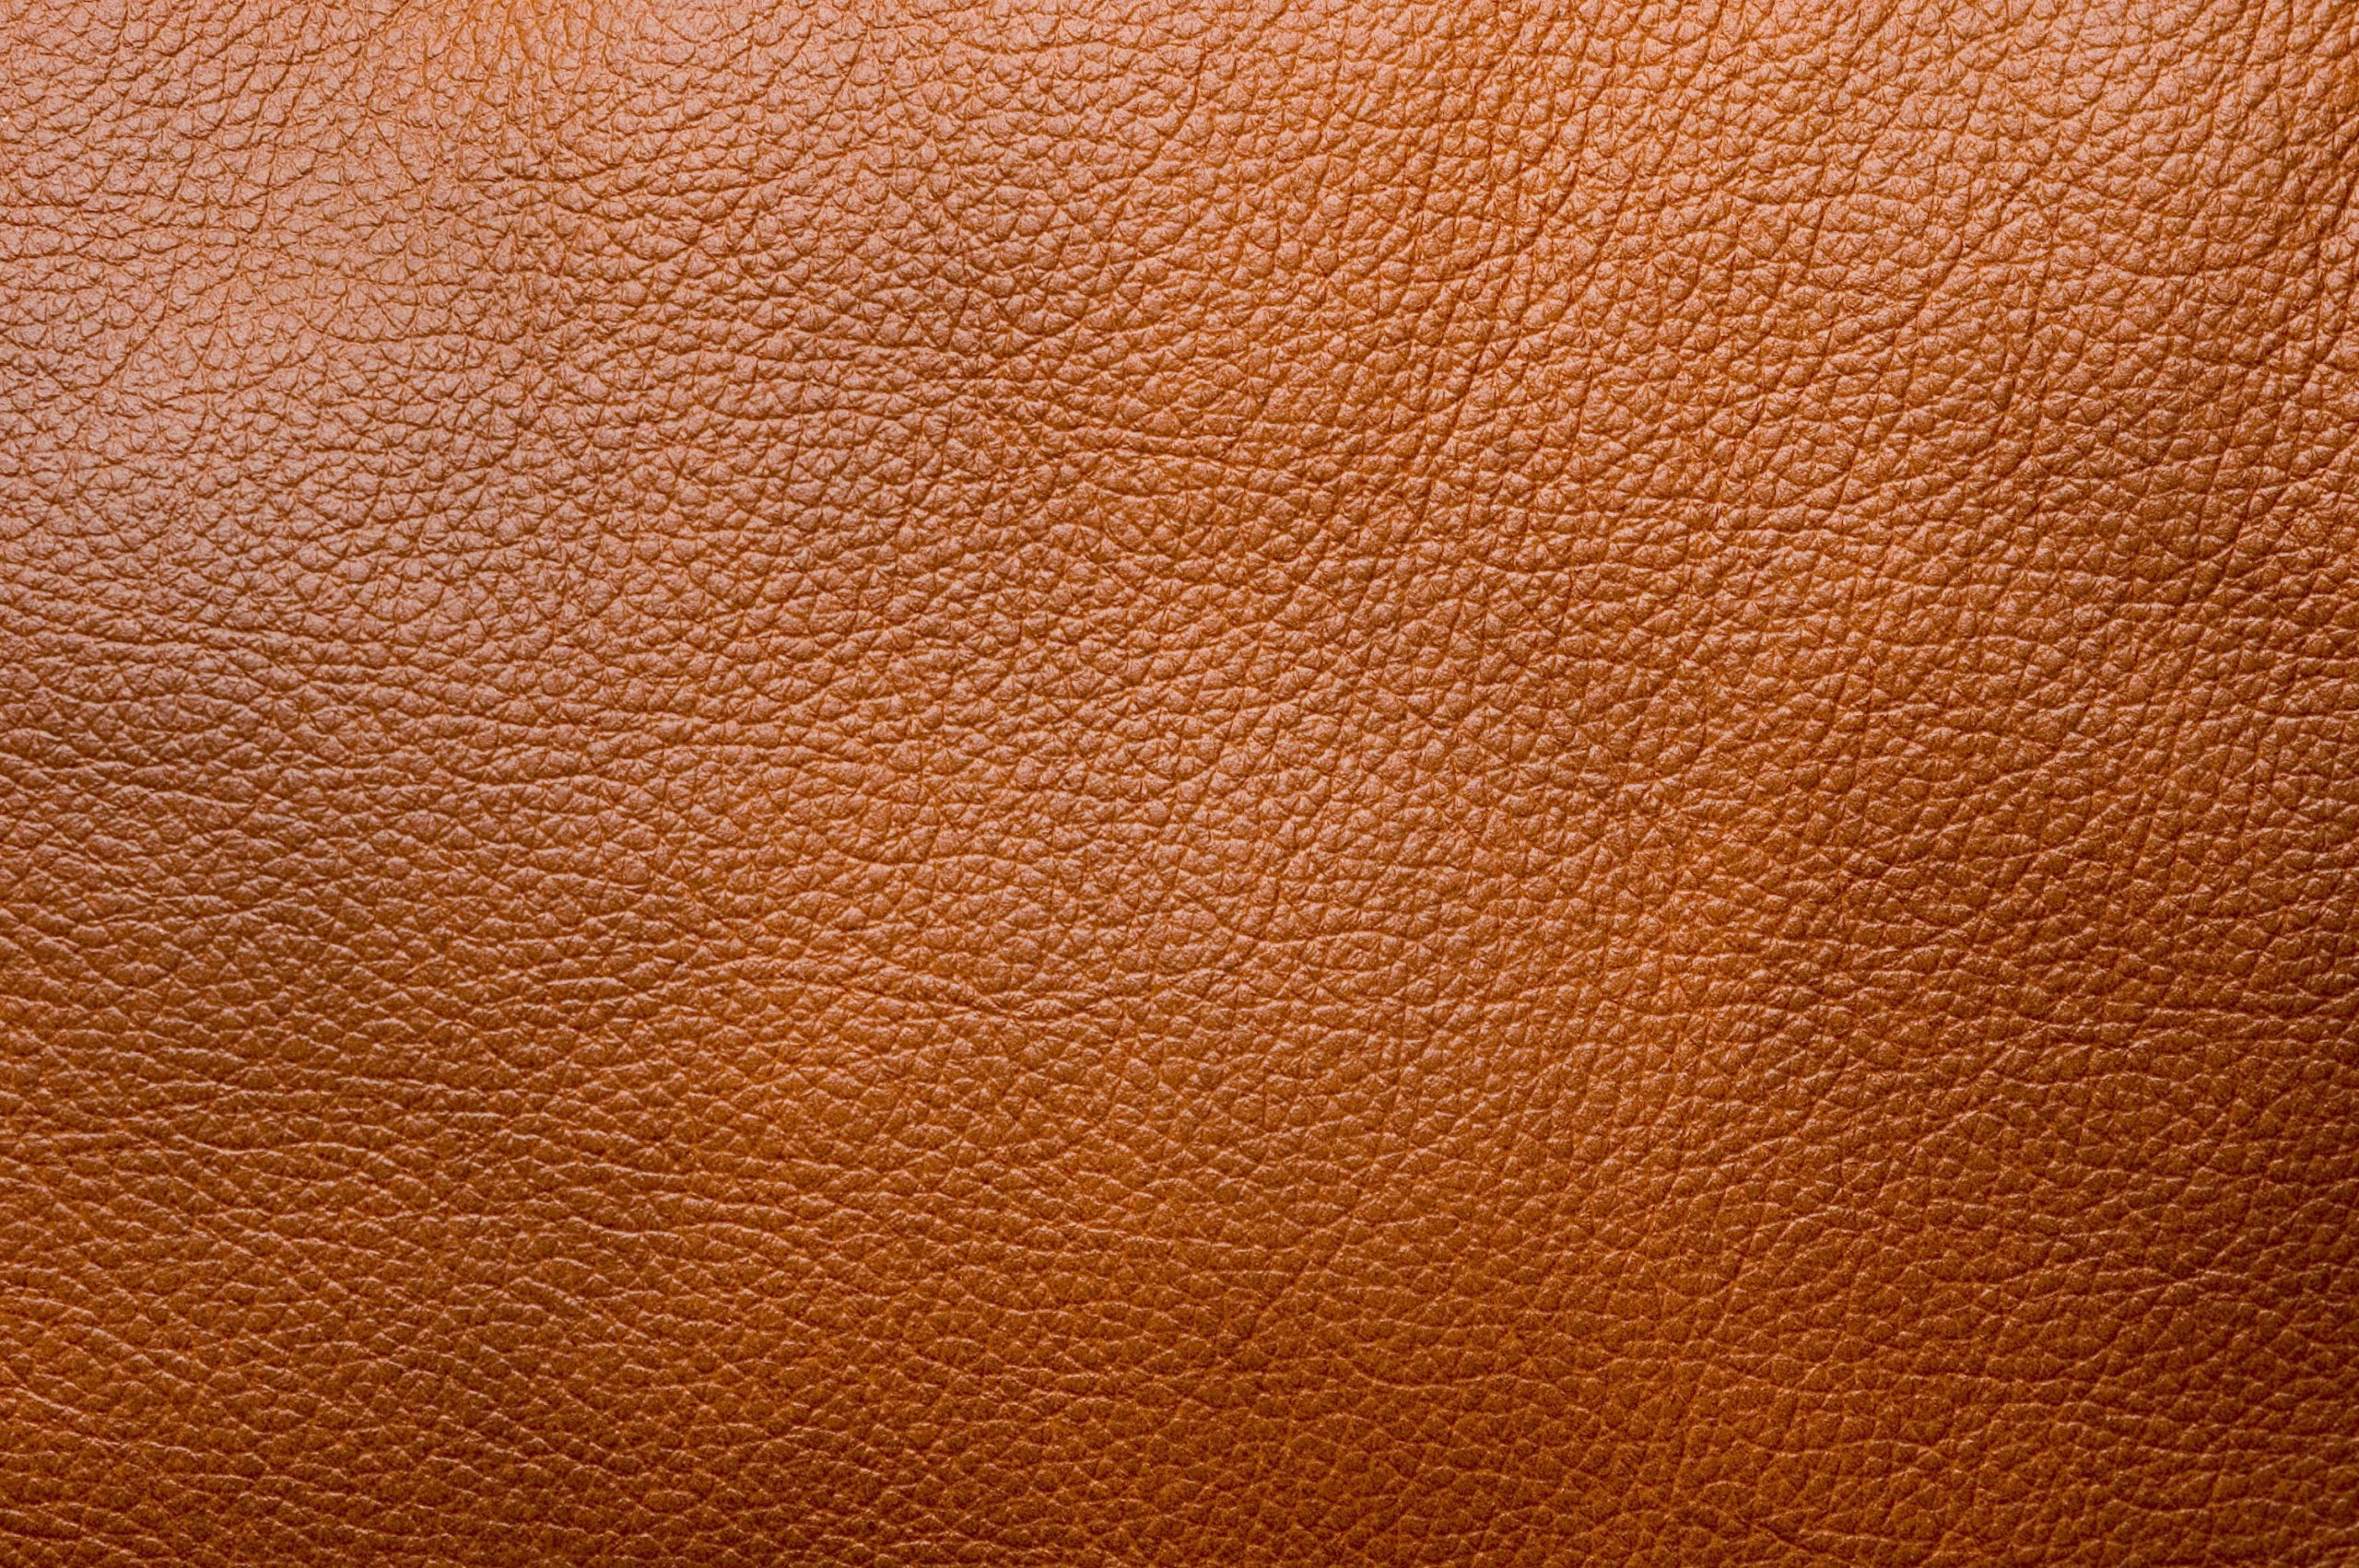 Wyzenbeek test on leather